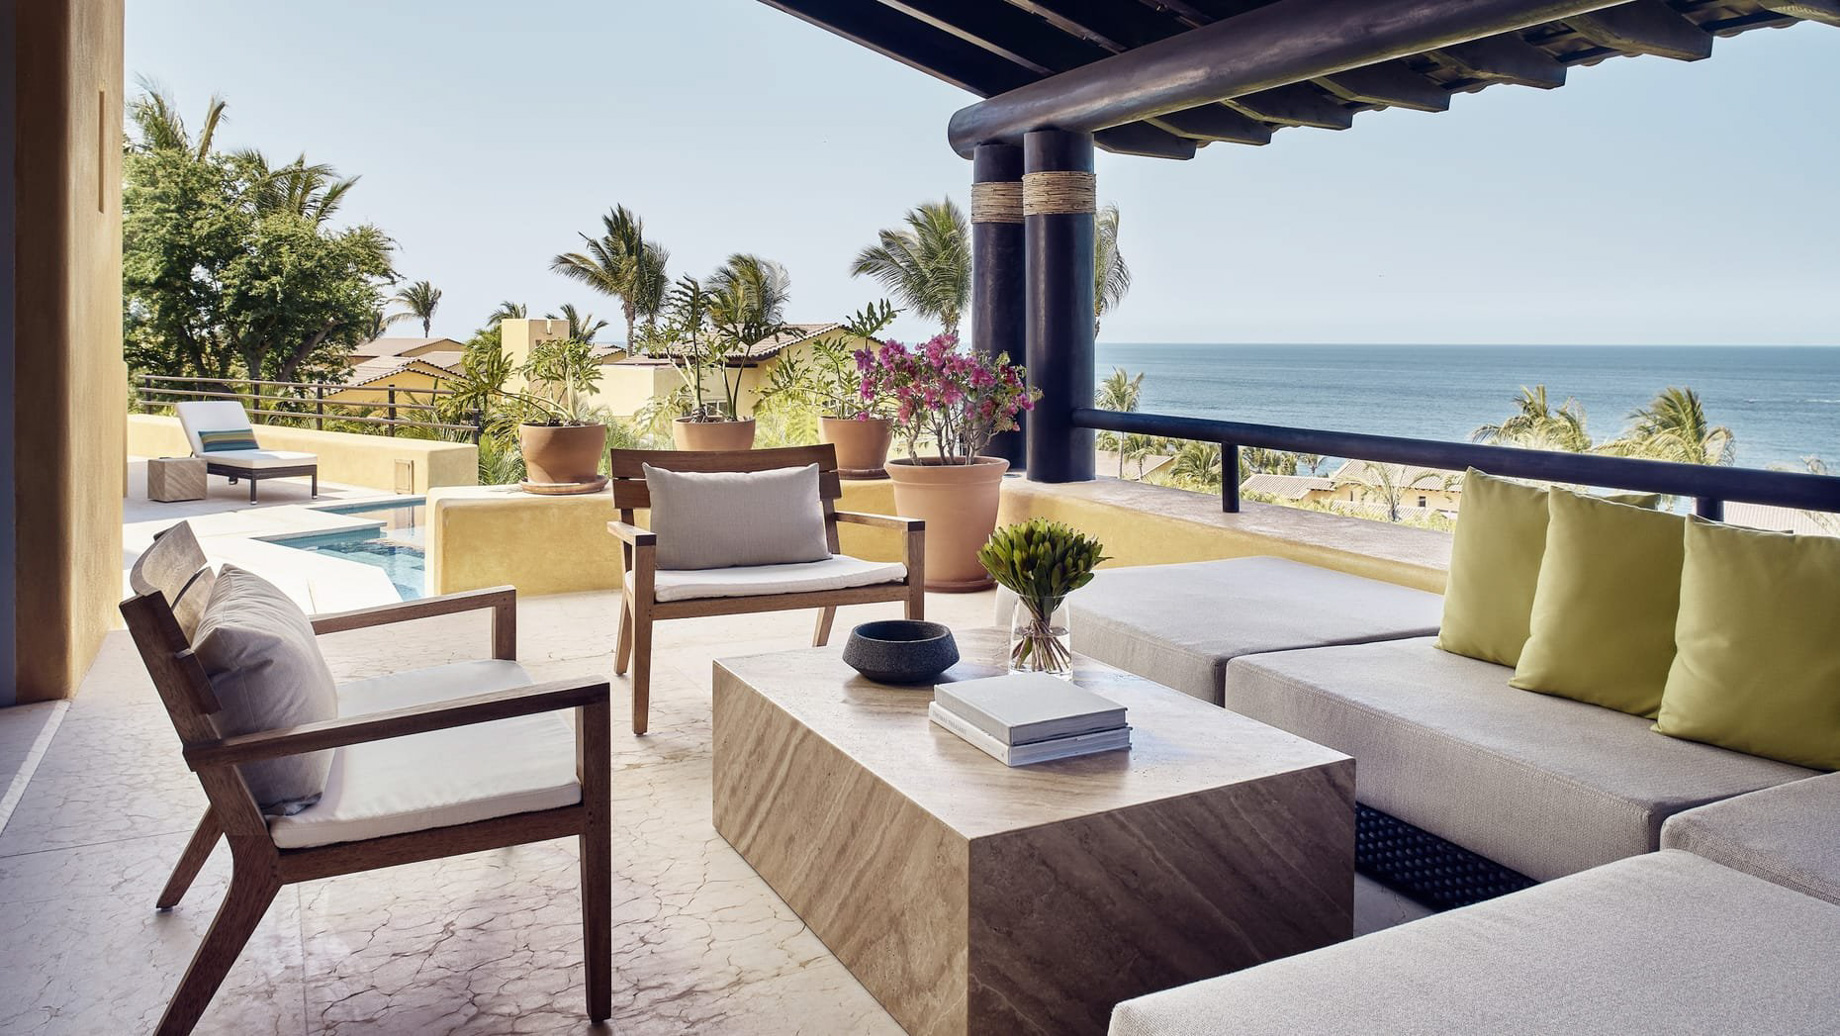 Four Seasons Resort Punta Mita – Nayarit, Mexico – Verano Ocean View Villa Deck